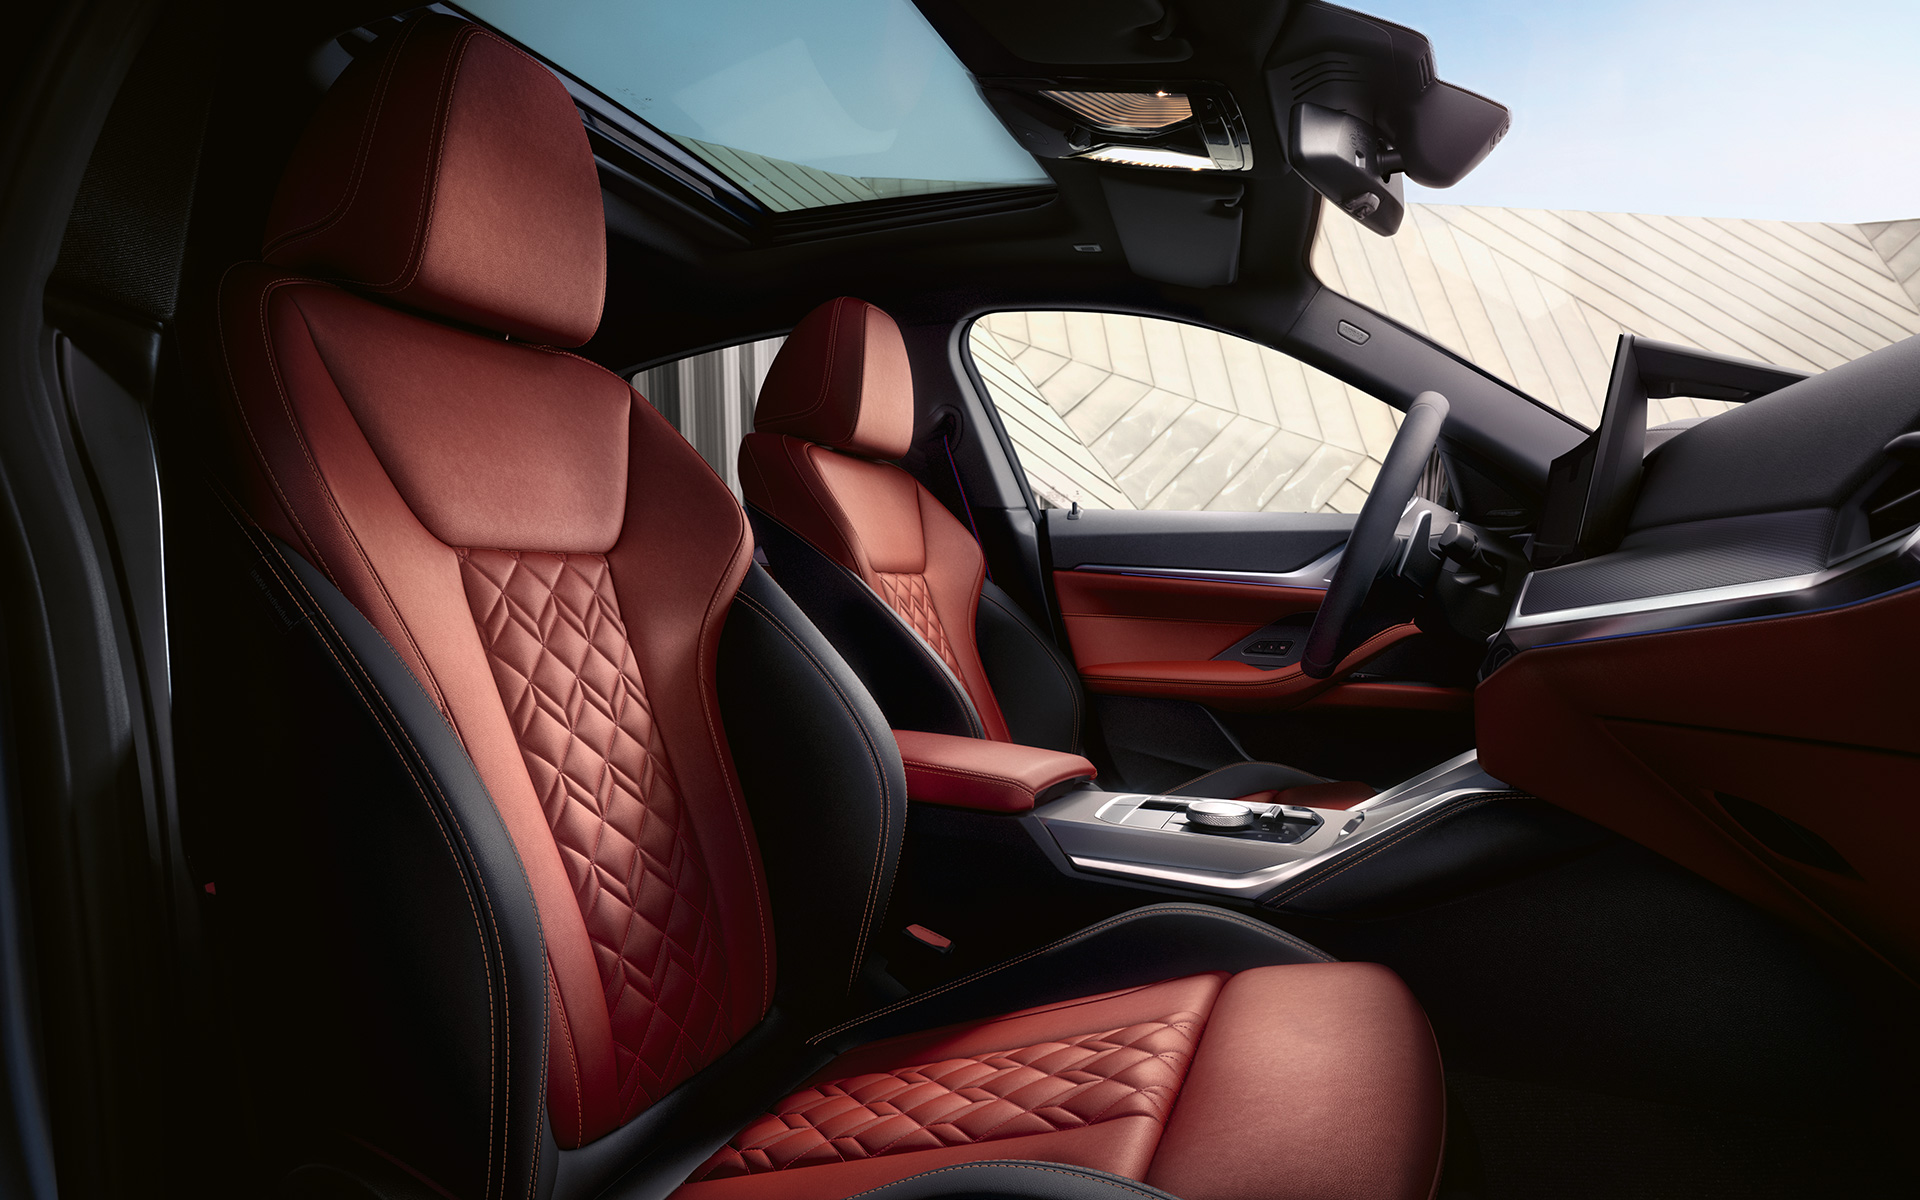 BMW 440i interior - Seats